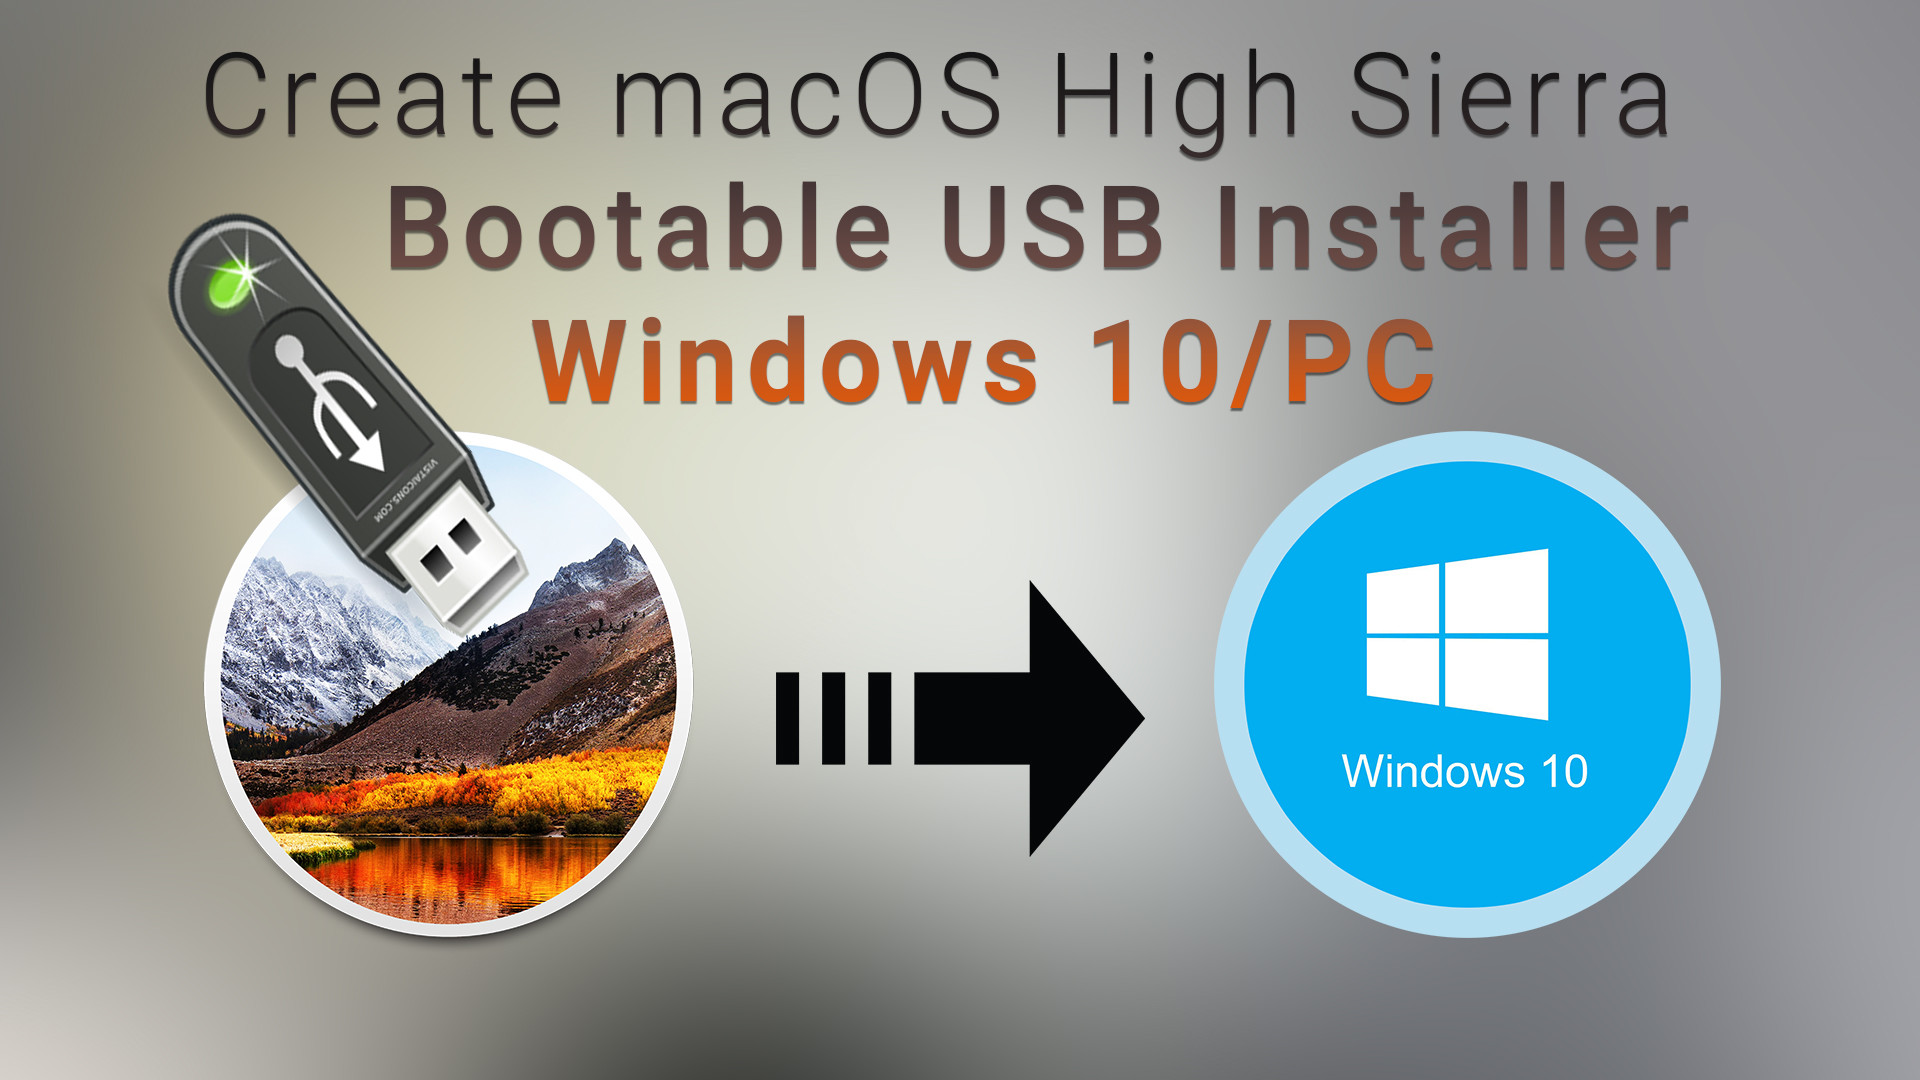 create a linux mint bootable usb for mac